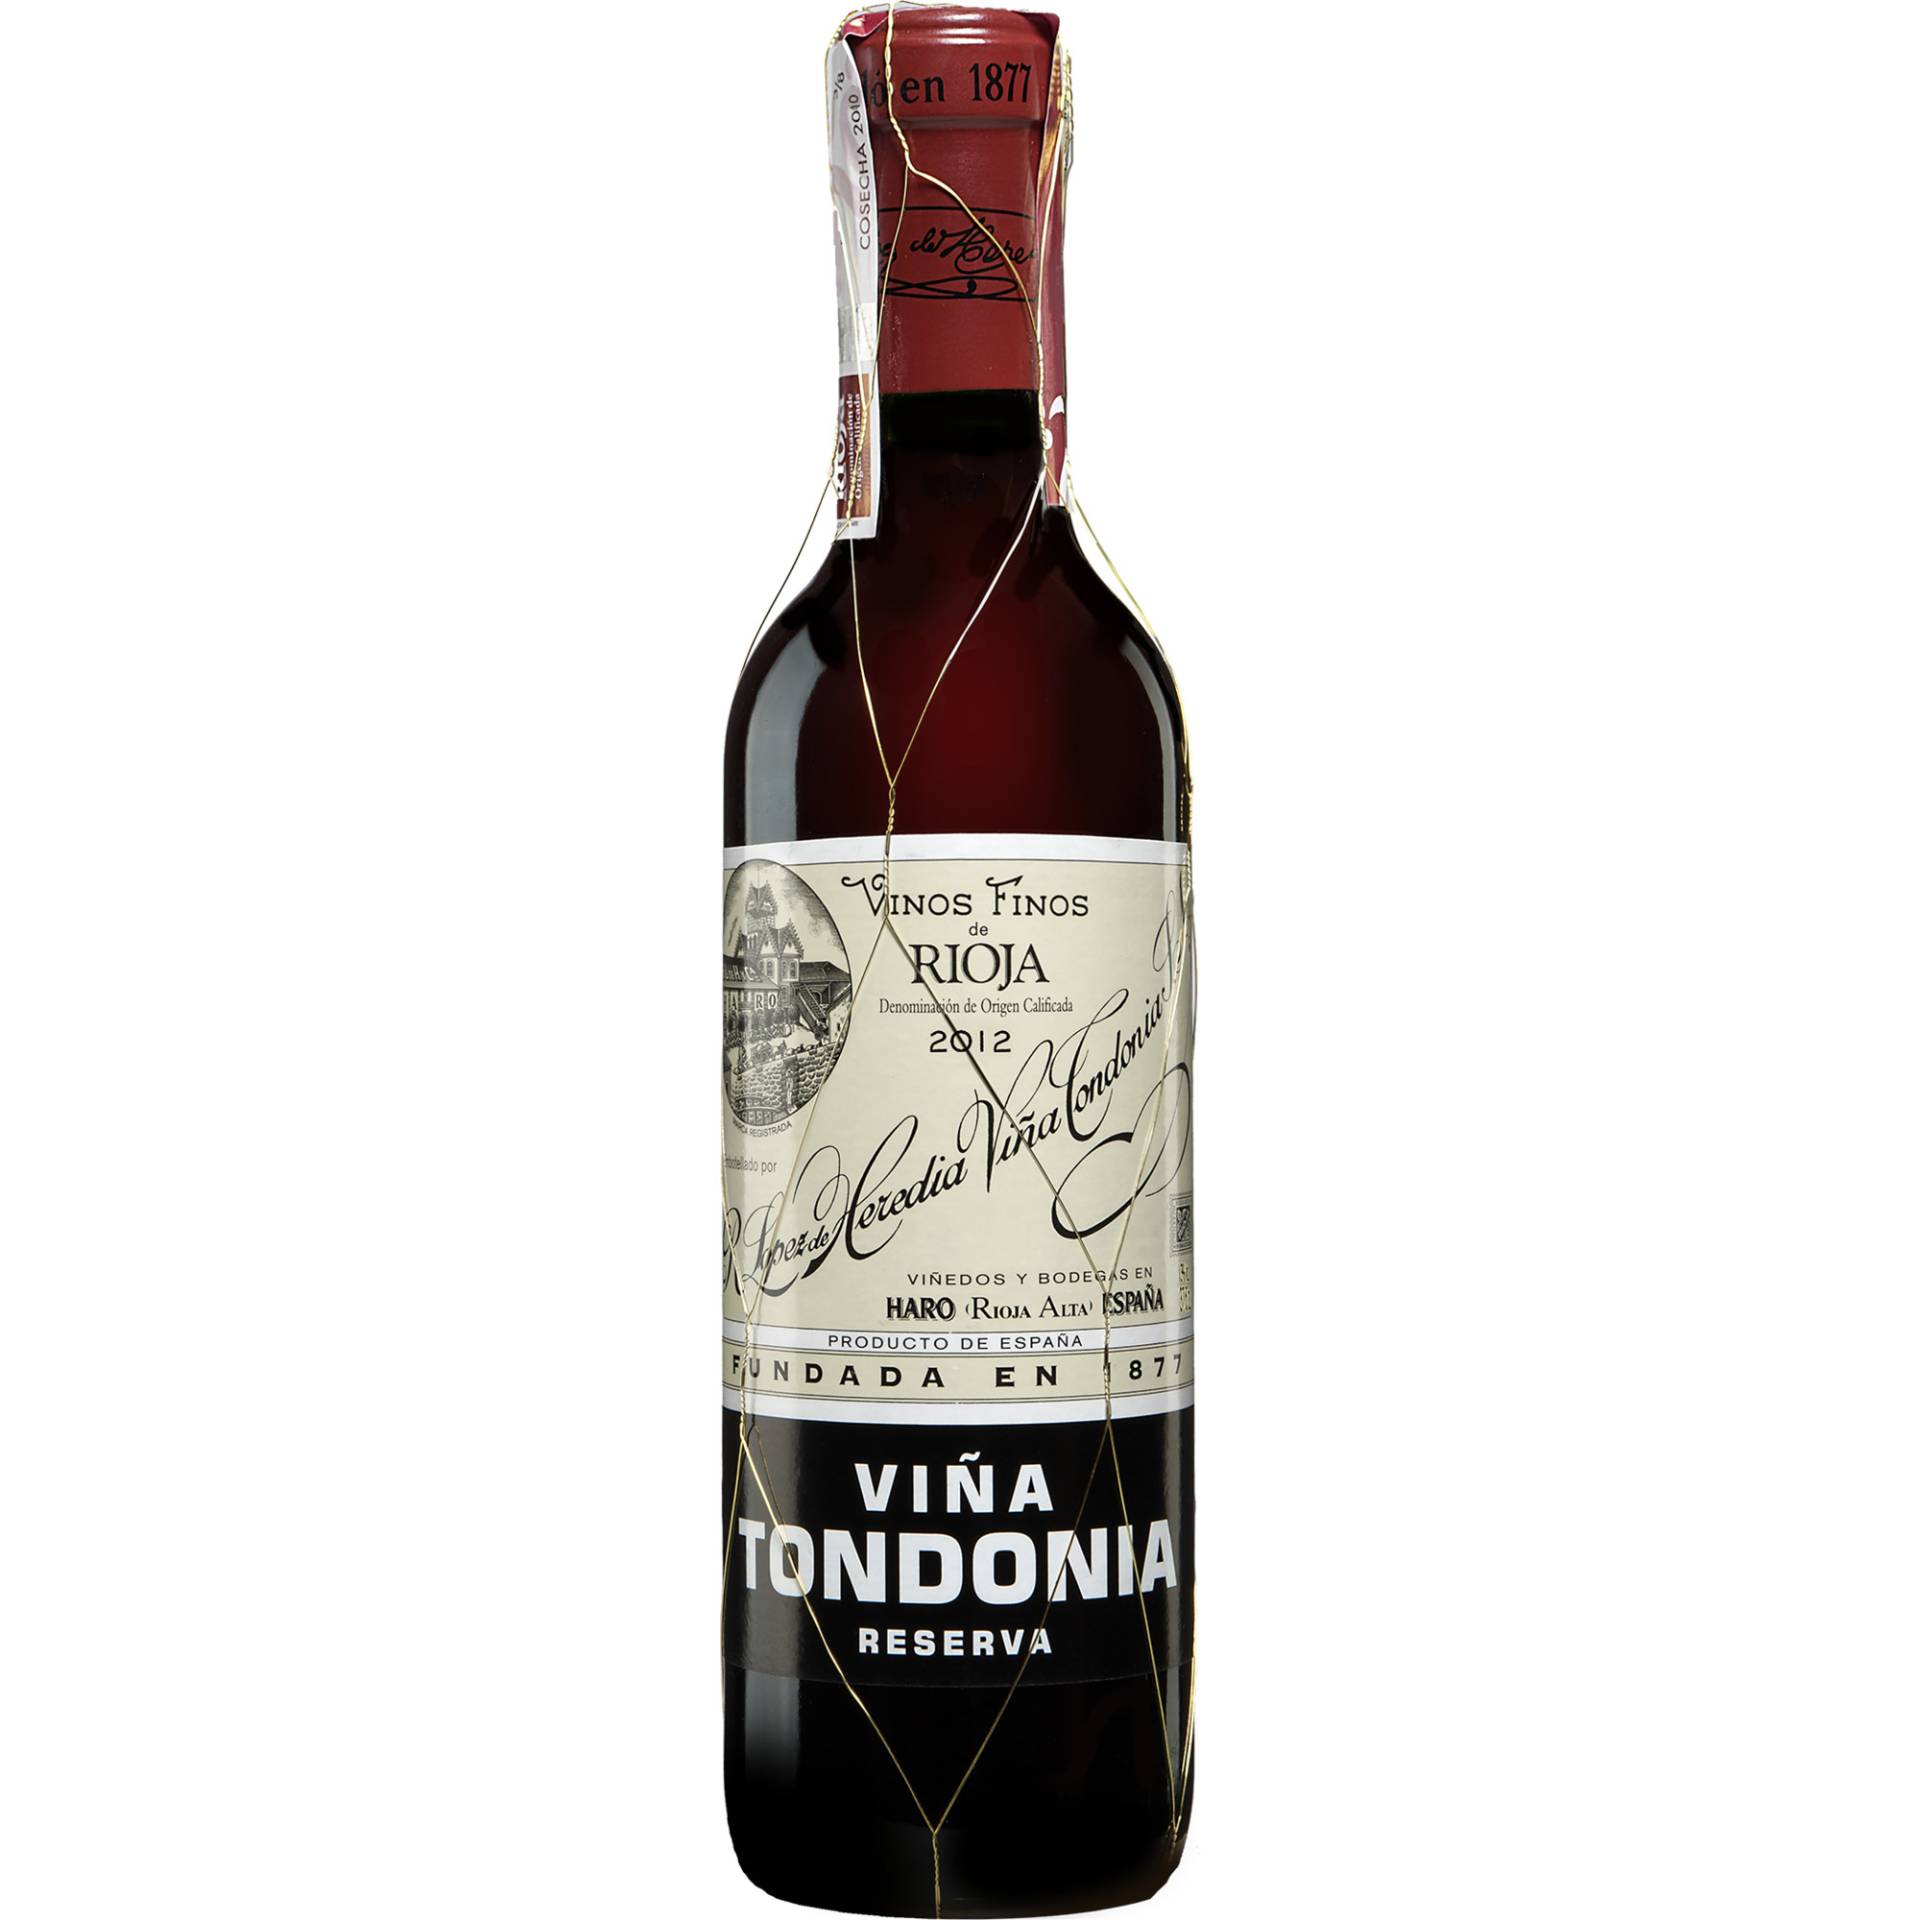 Tondonia »Viña Tondonia« Tinto Reserva - 0,375 L. 2012  0.375L 13.5% Vol. Rotwein Trocken aus Spanien von López de Heredia - Viña Tondonia